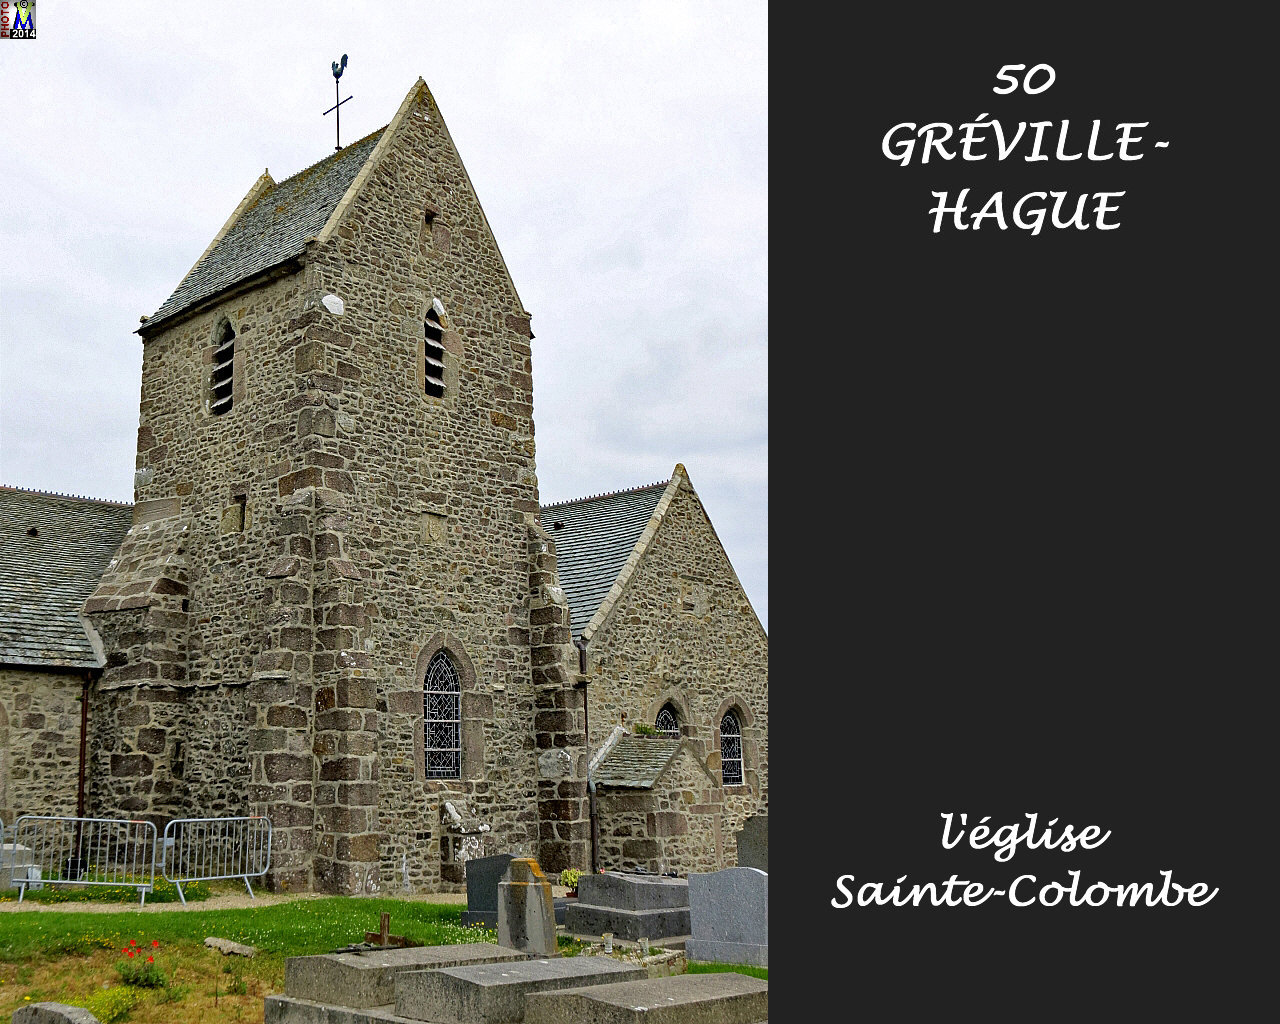 50GREVILLE-HAGUE_eglise_104.jpg